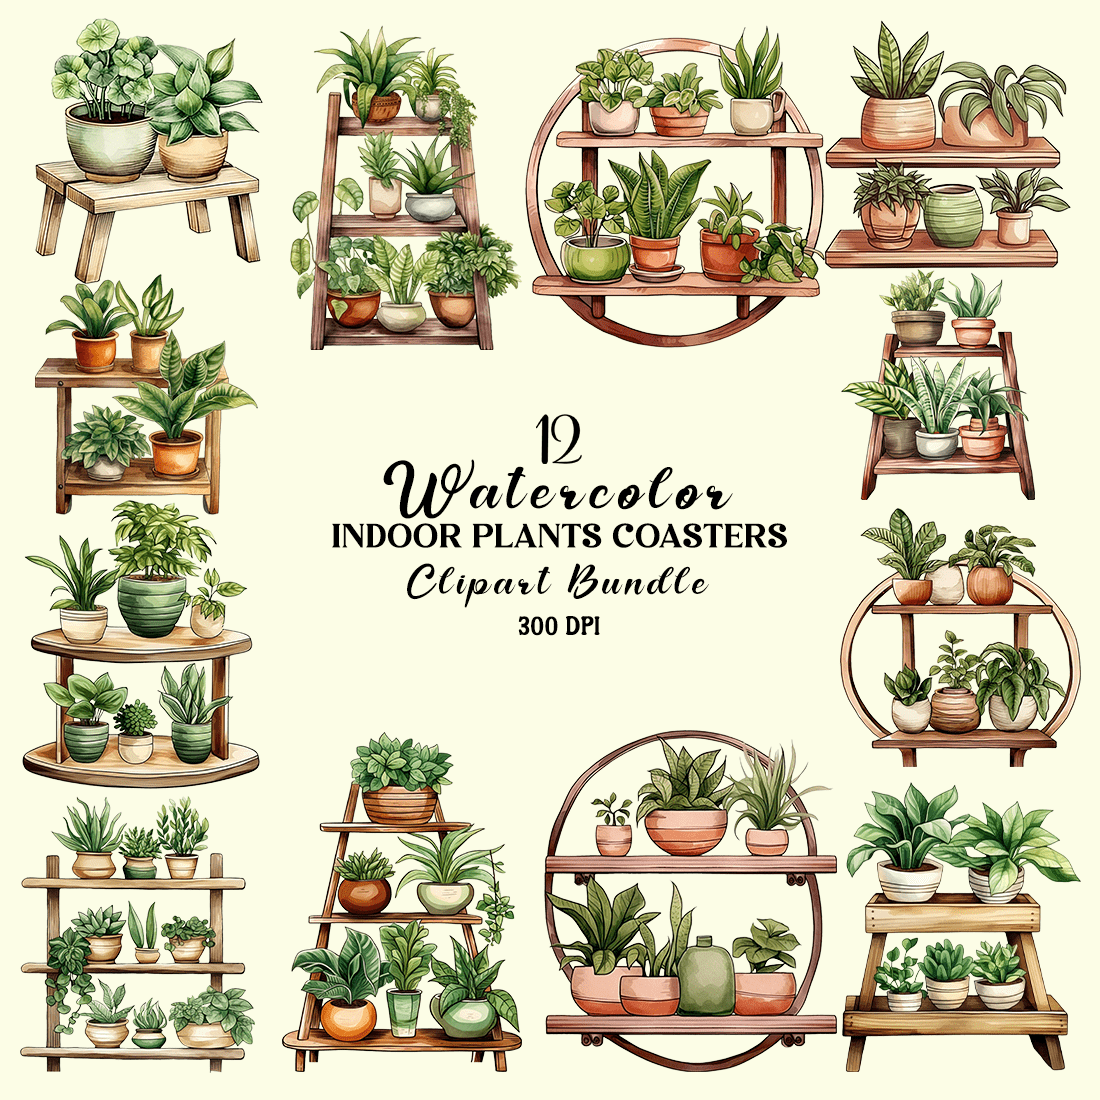 Watercolor Indoor Plants Coasters Clipart Bundle cover image.